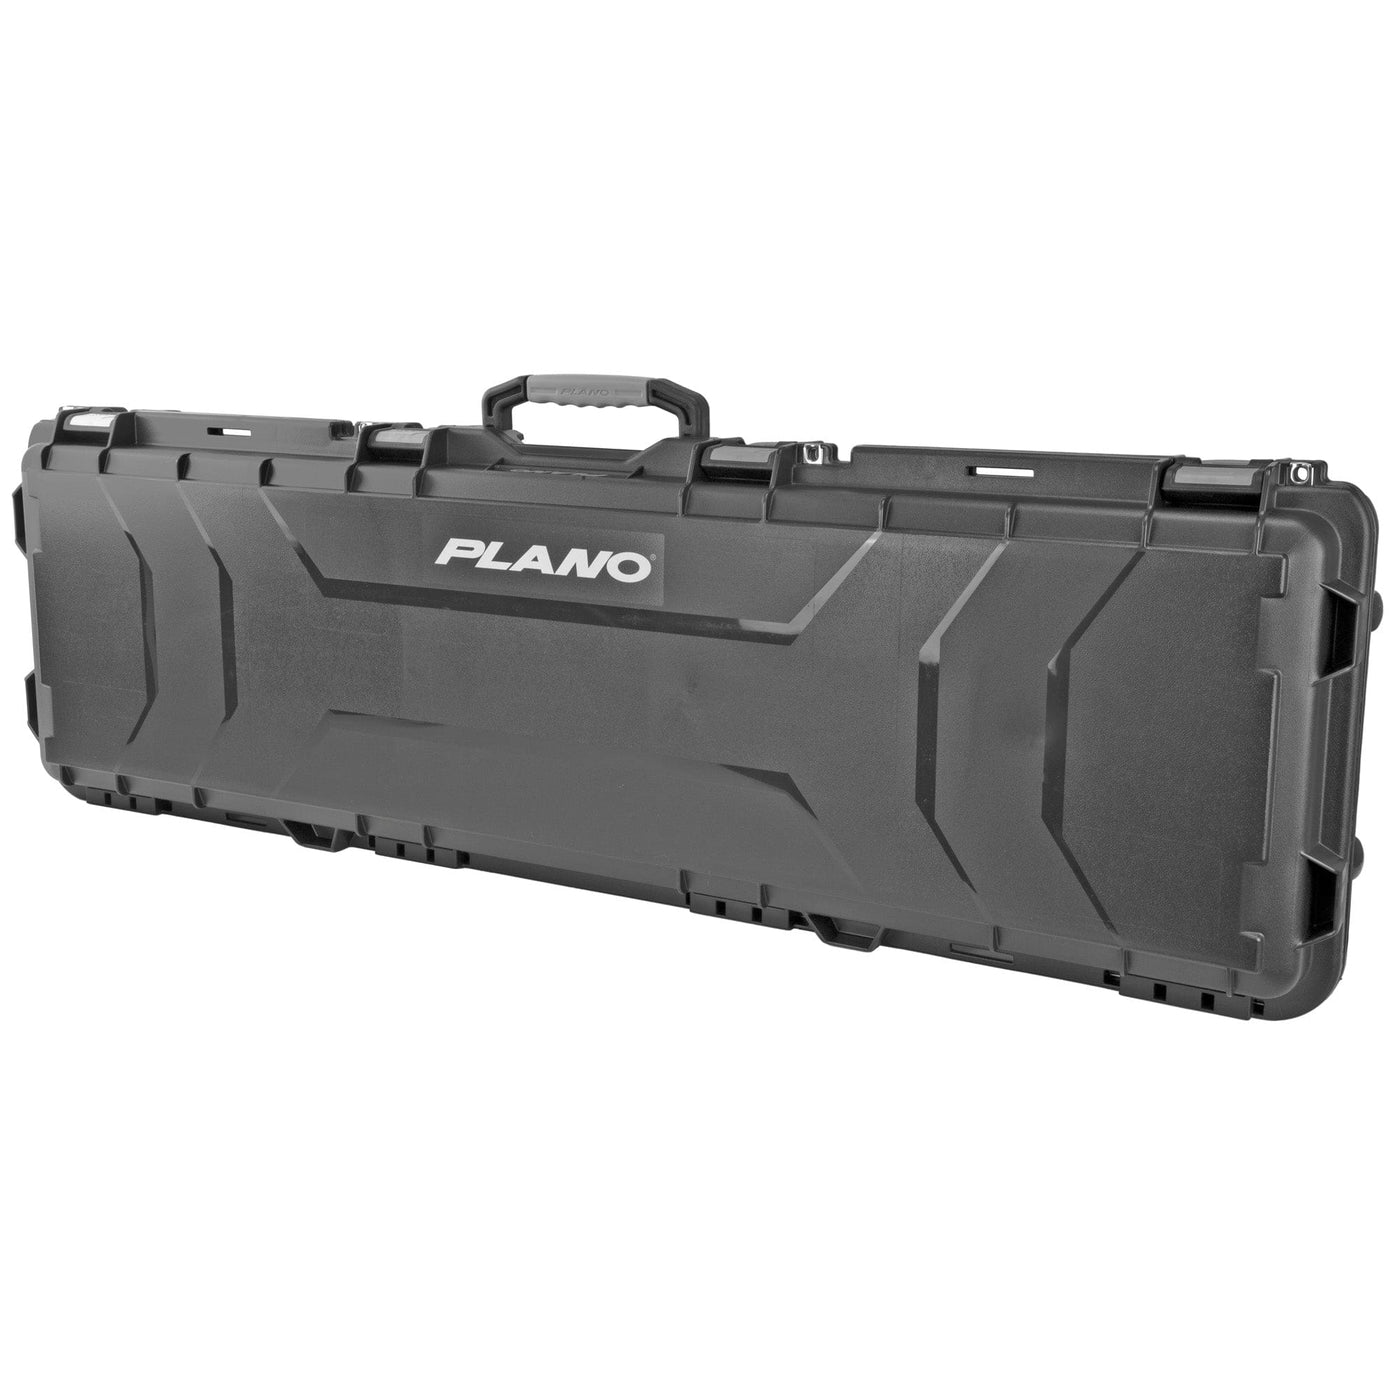 Plano Plano Element Double Long Gun 54 Case Black With Grey Accents Gun Storage